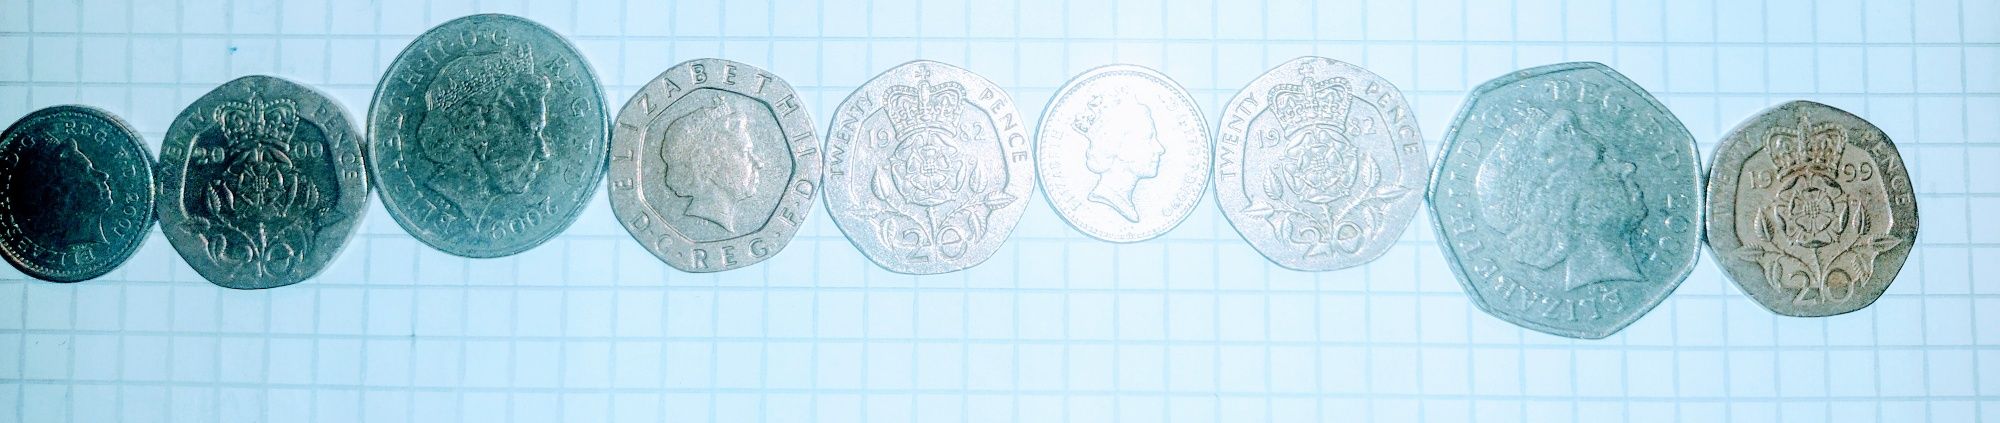 Monede cu u Regina angliei  vechi